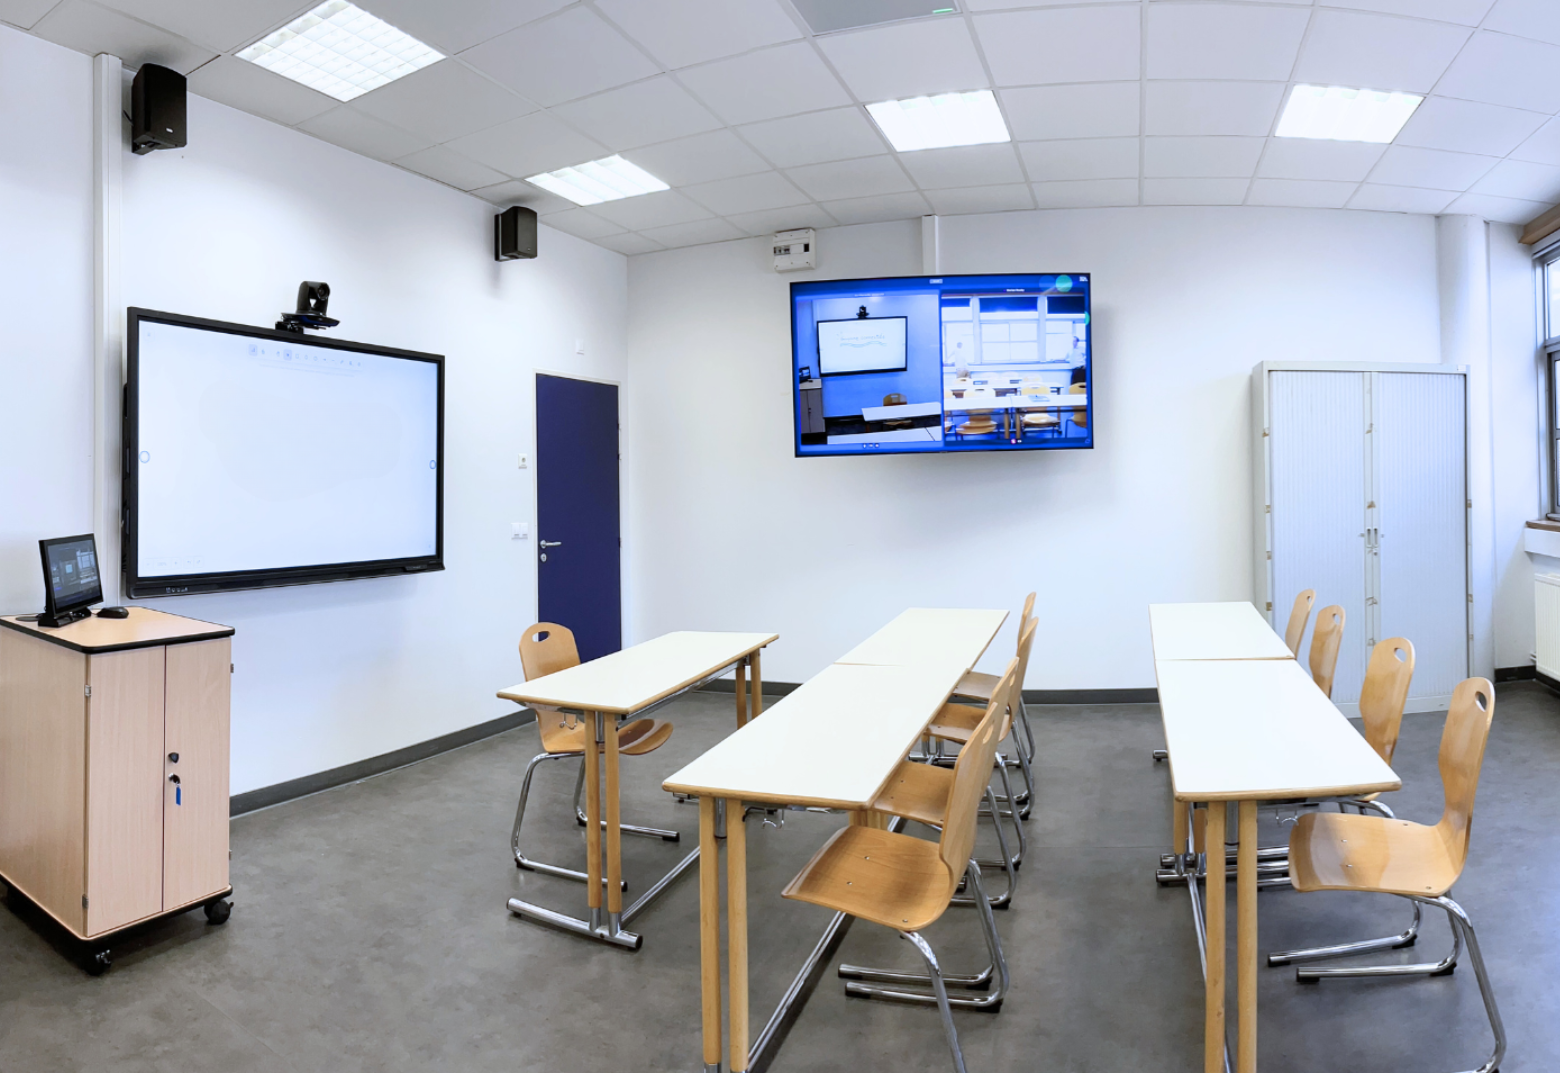 Hybrid classroom equipment